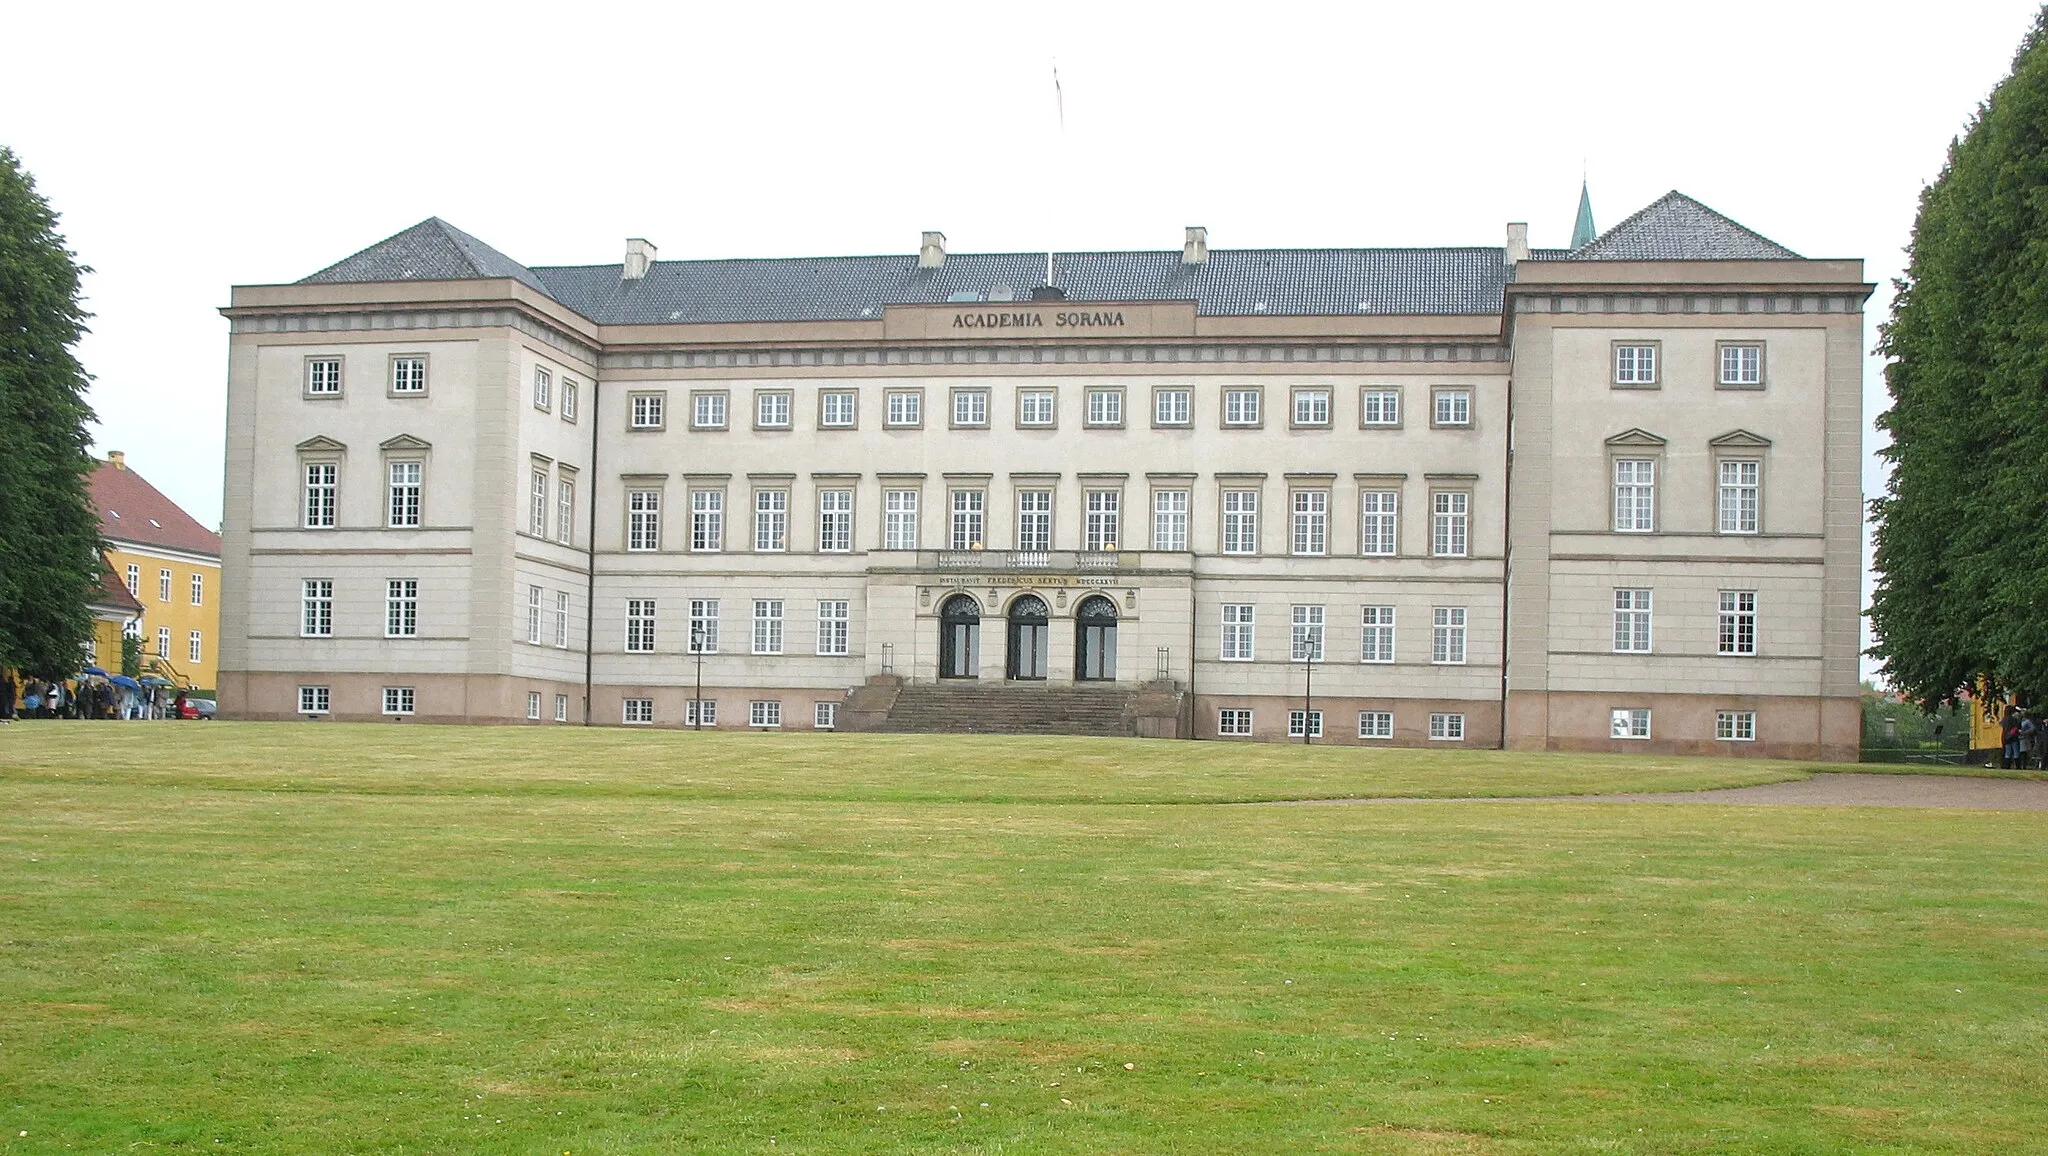 Photo showing: The academy "Sorø Akademi" in the town "Sorø" located in West Zealand, east Denmark.